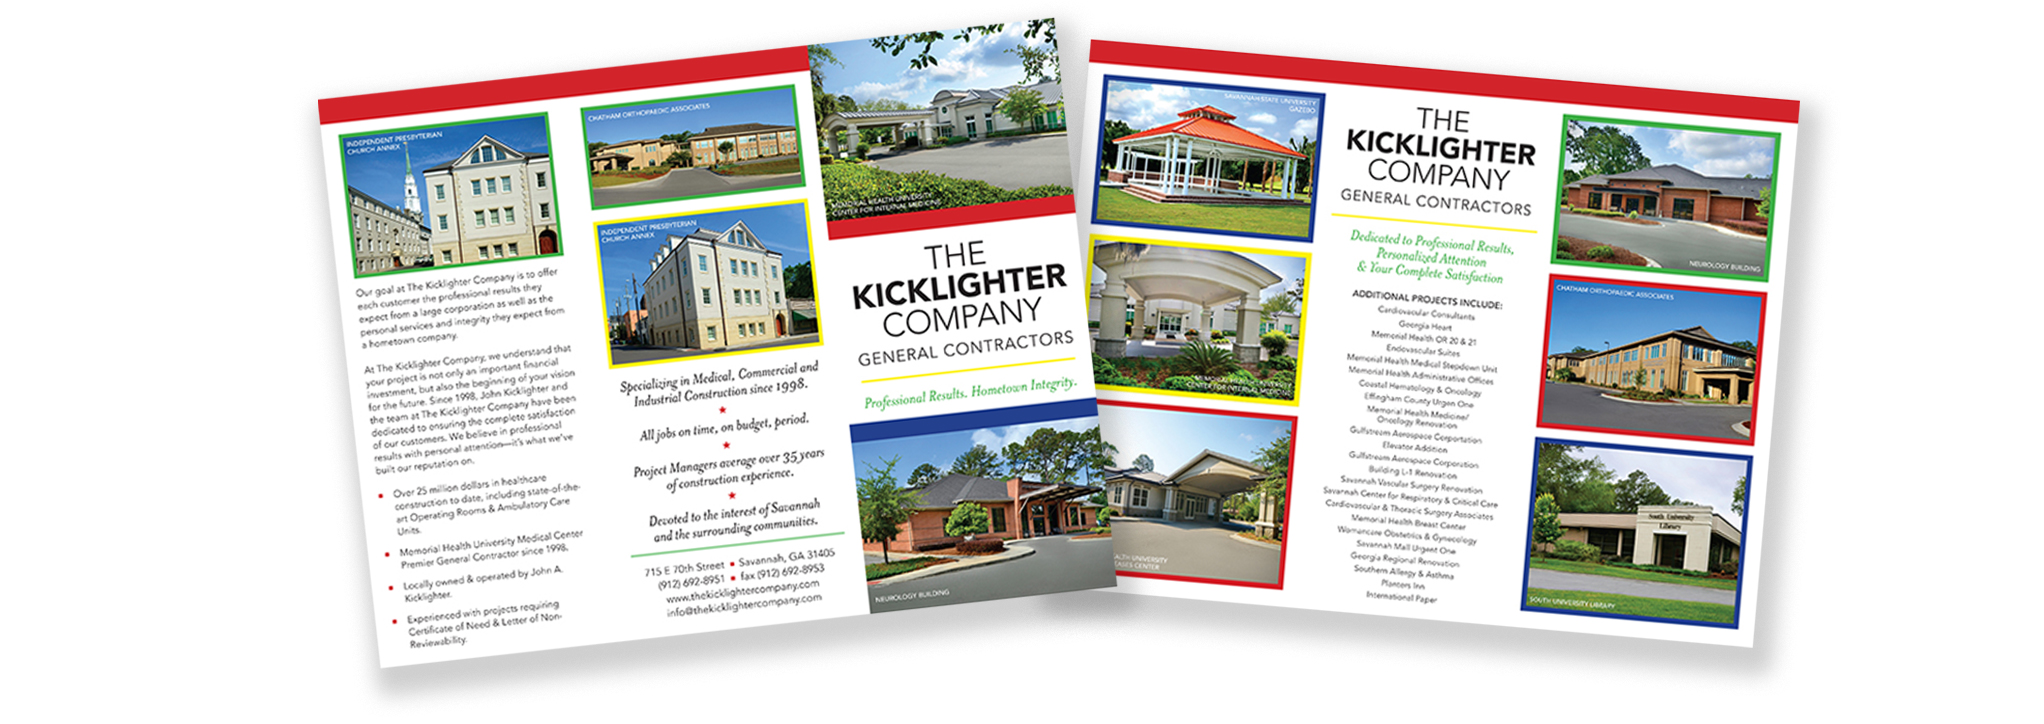 The Kicklighter Company trifold brochure